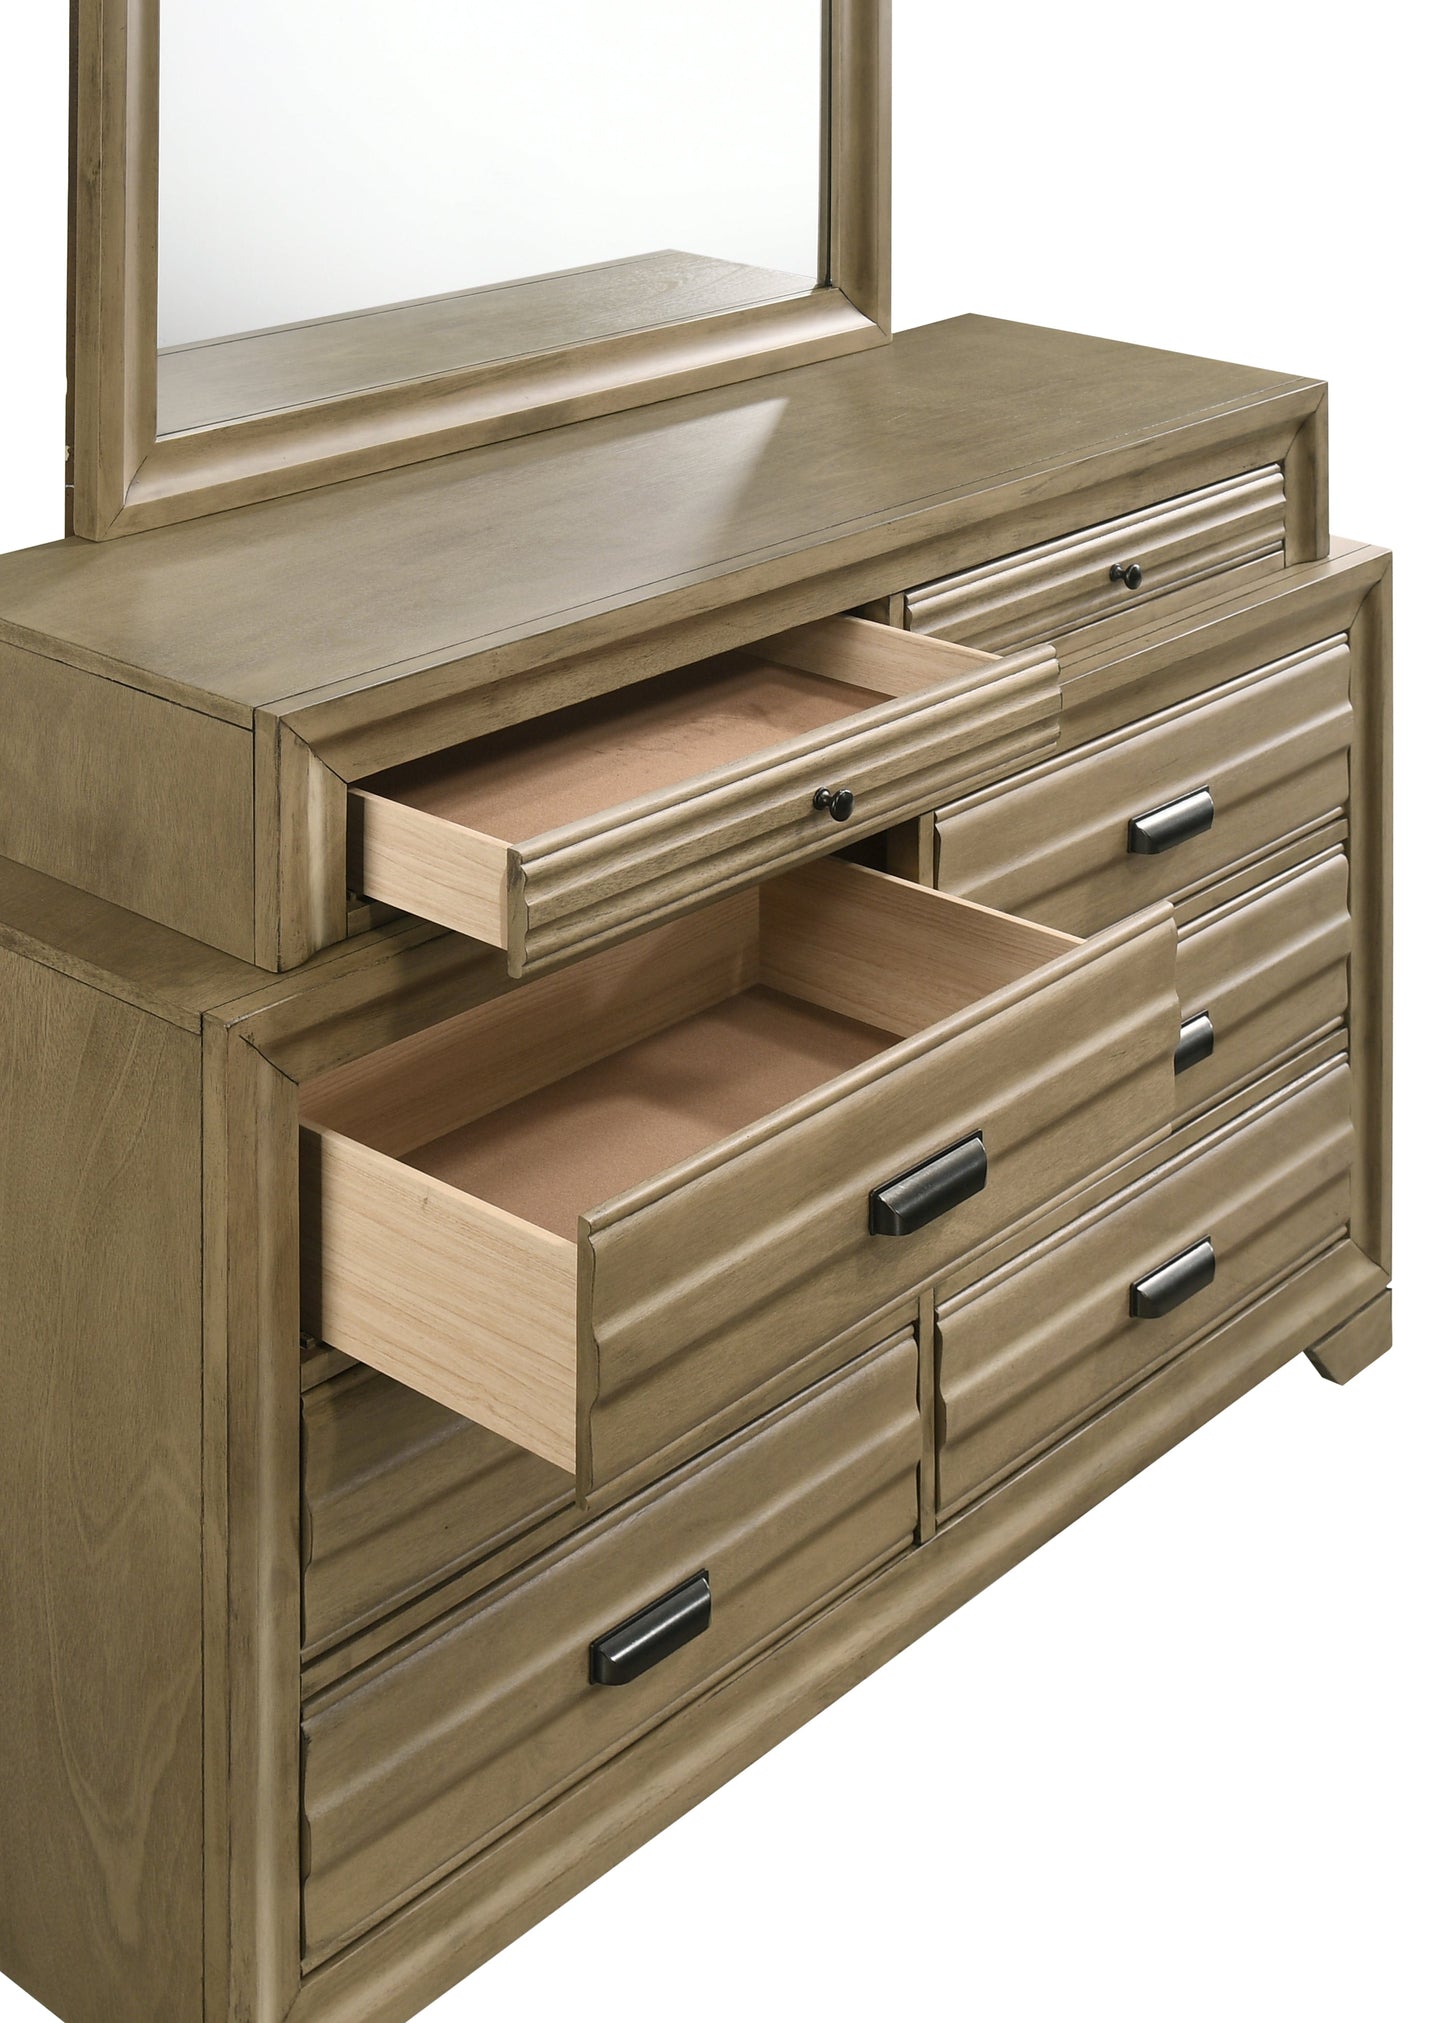 Loiret Light Gray Finish Wood 8-Drawer Dresser with Mirror